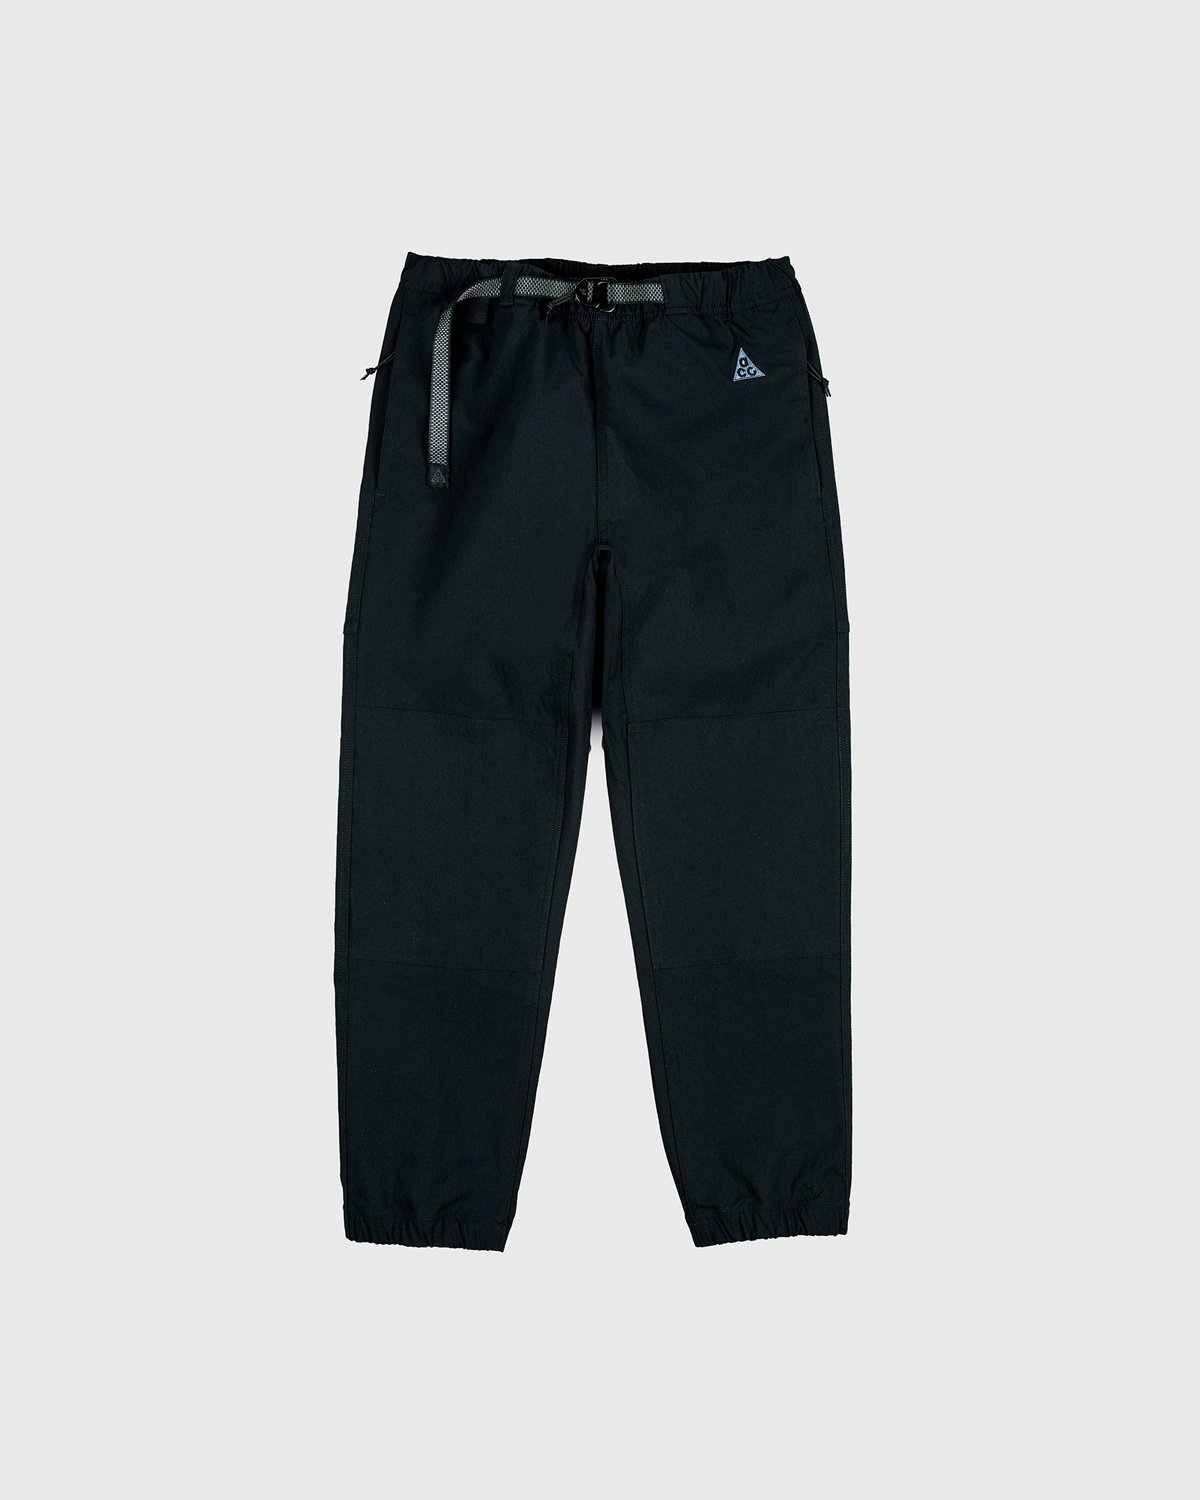 Nike ACG - M NRG ACG Trail Pant Black - Clothing - Black - Image 1